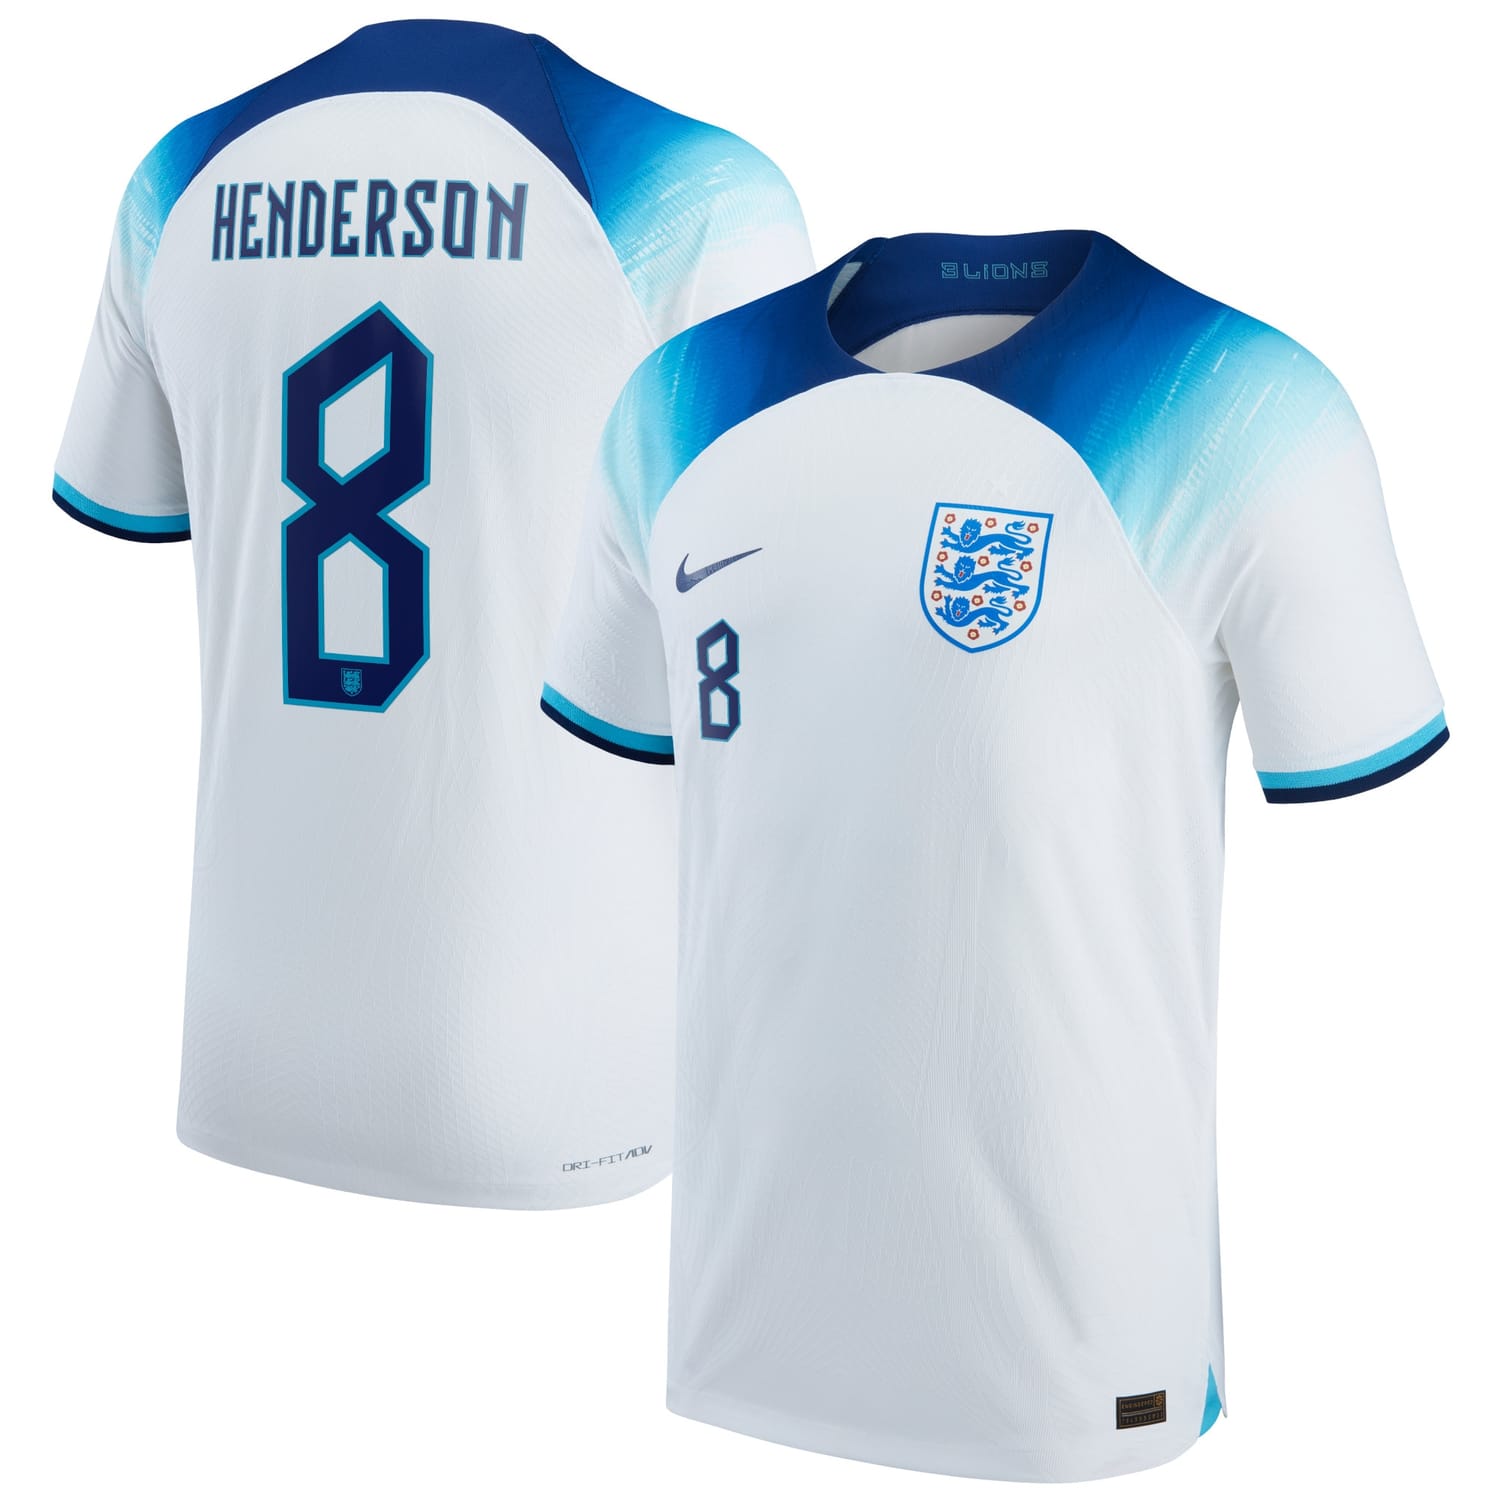 England National Team Home Authentic Jersey Shirt 2022 player Jordan Henderson 8 printing for Men